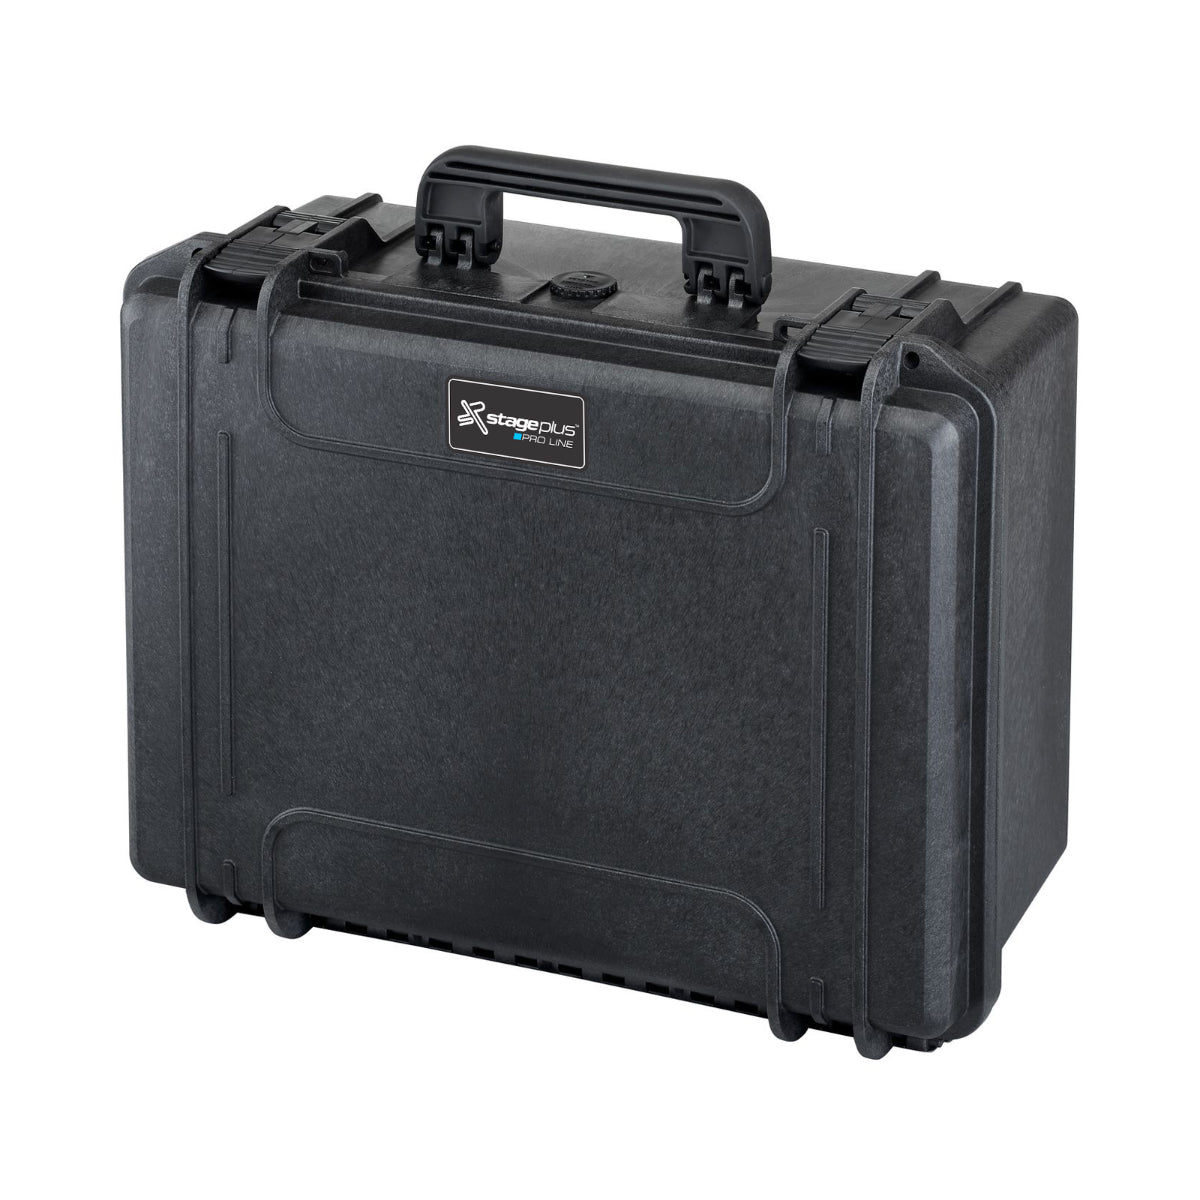 SP PRO 465H220S Black Carry Case, Cubed Foam, ID: L465xW335xH220mm